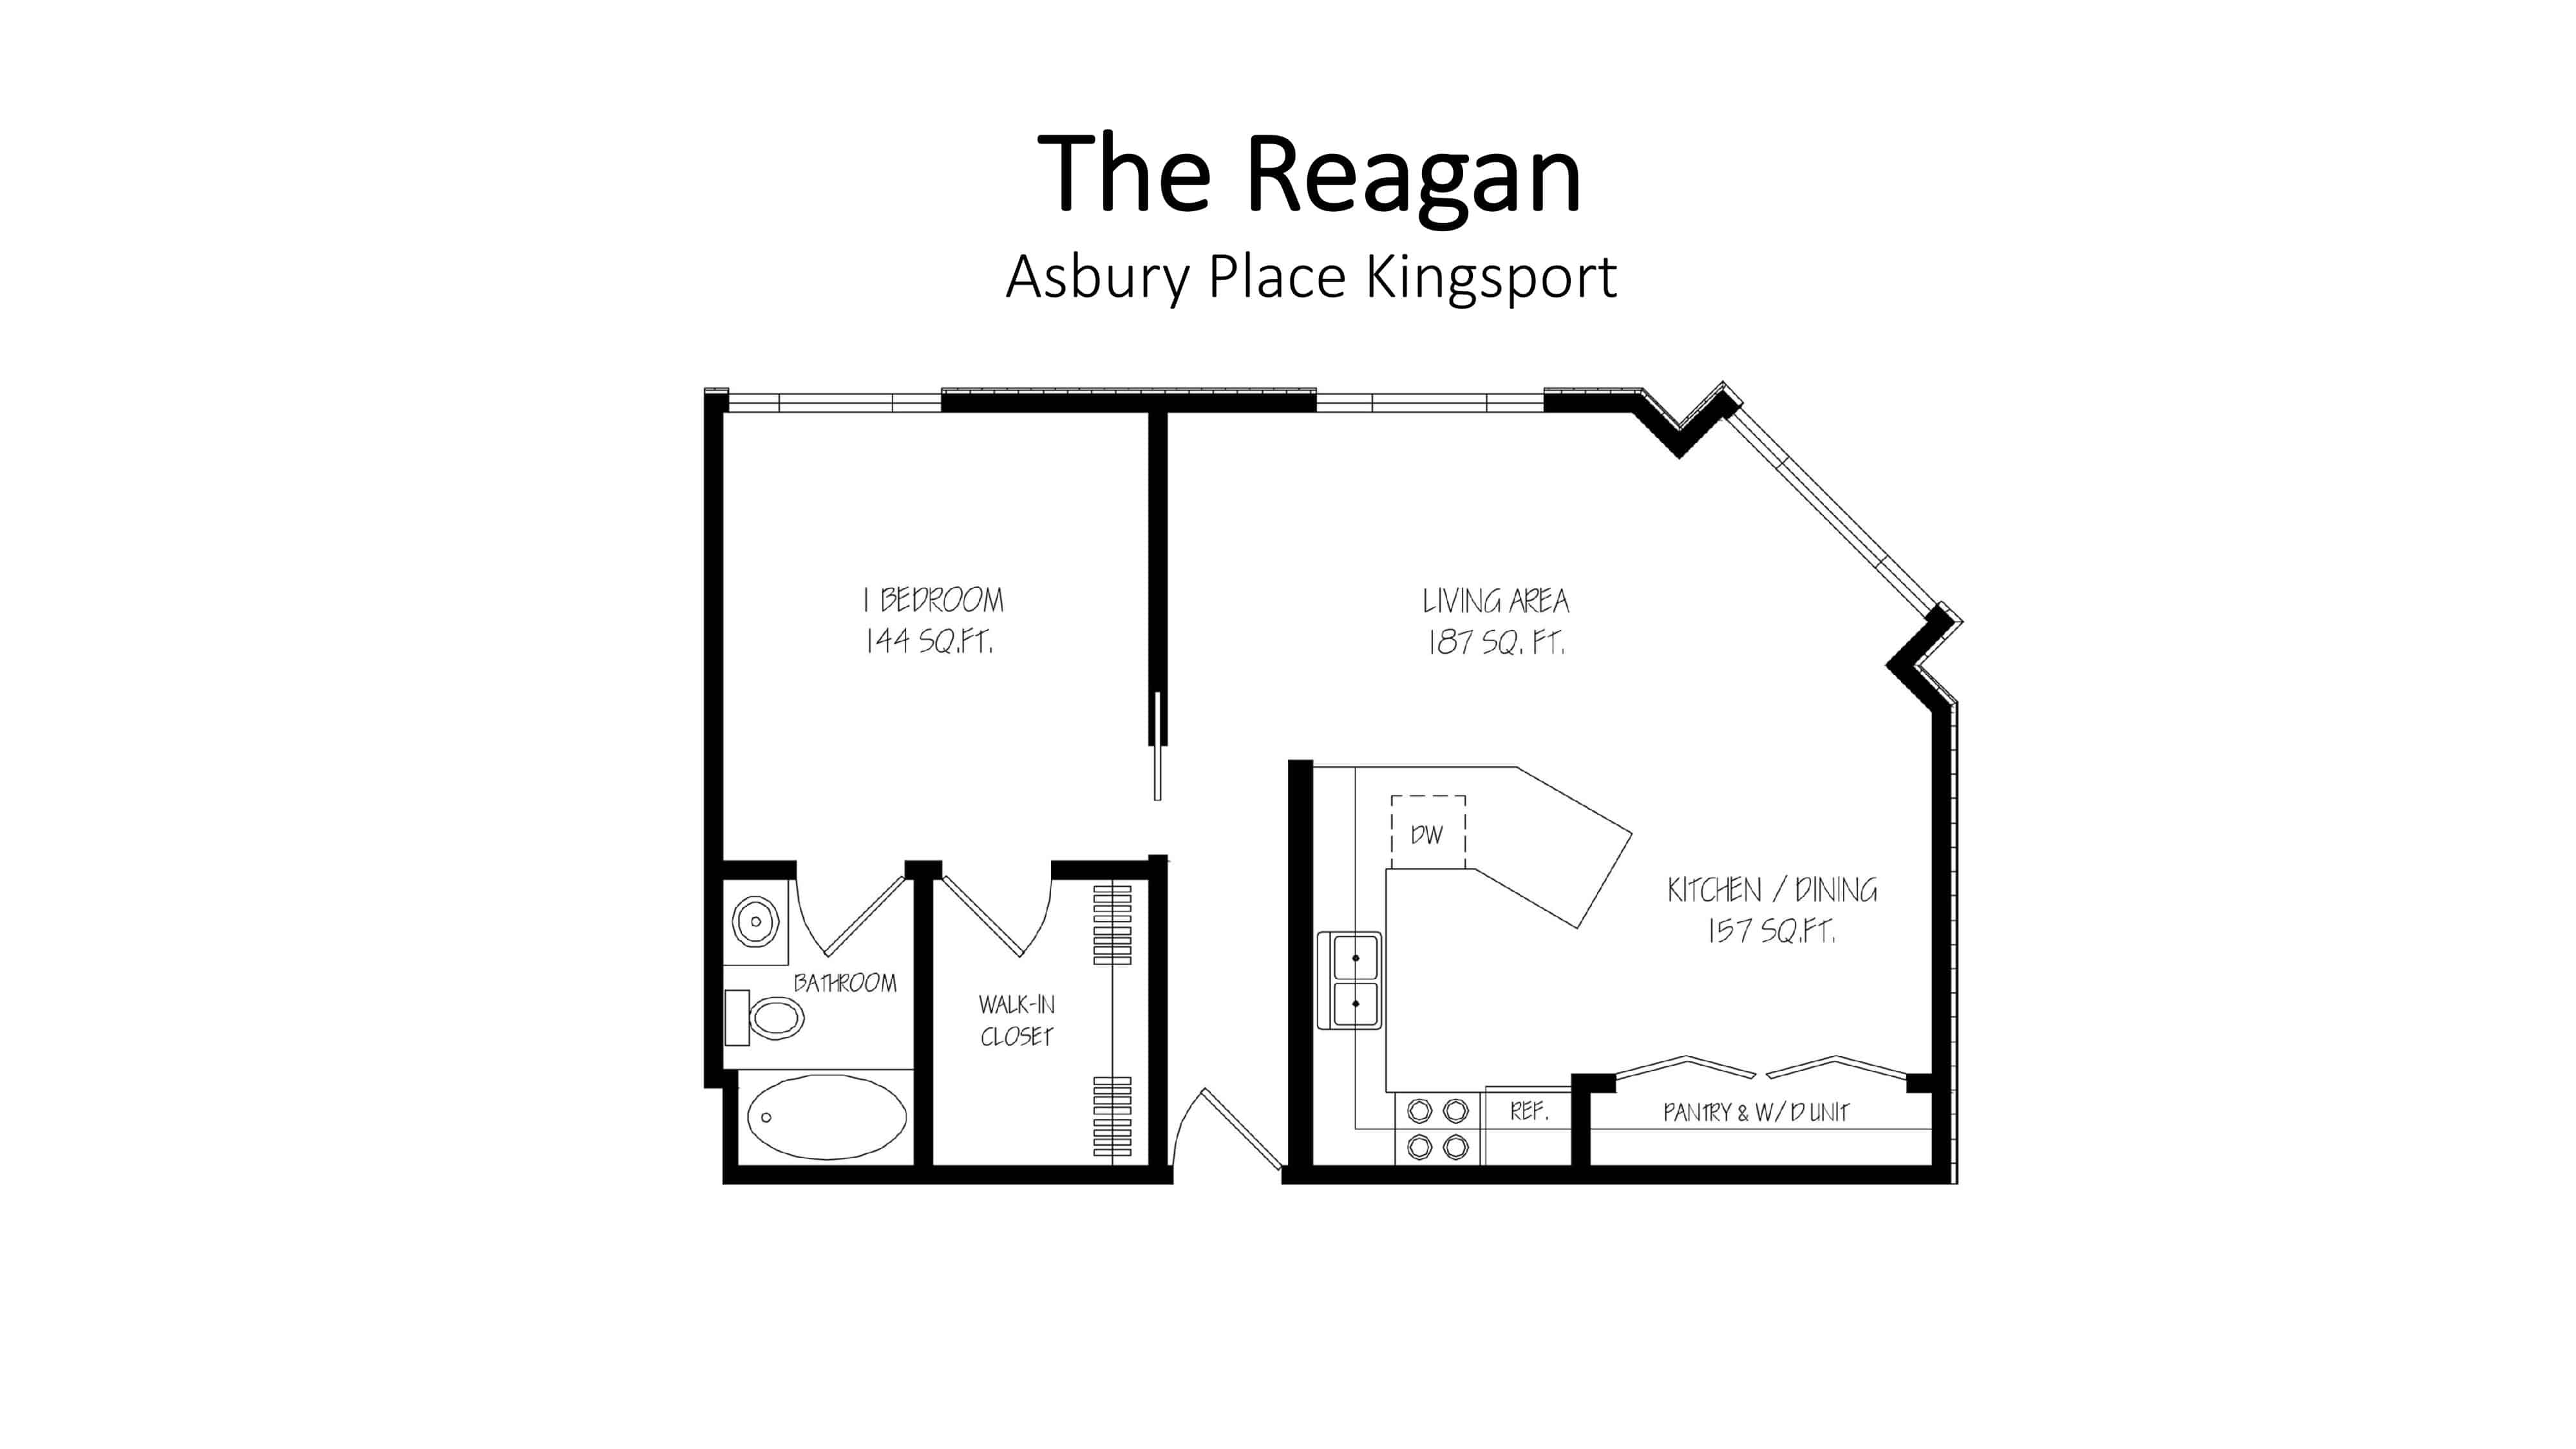 Asbury Place Kingsport The Reagan Floorplan